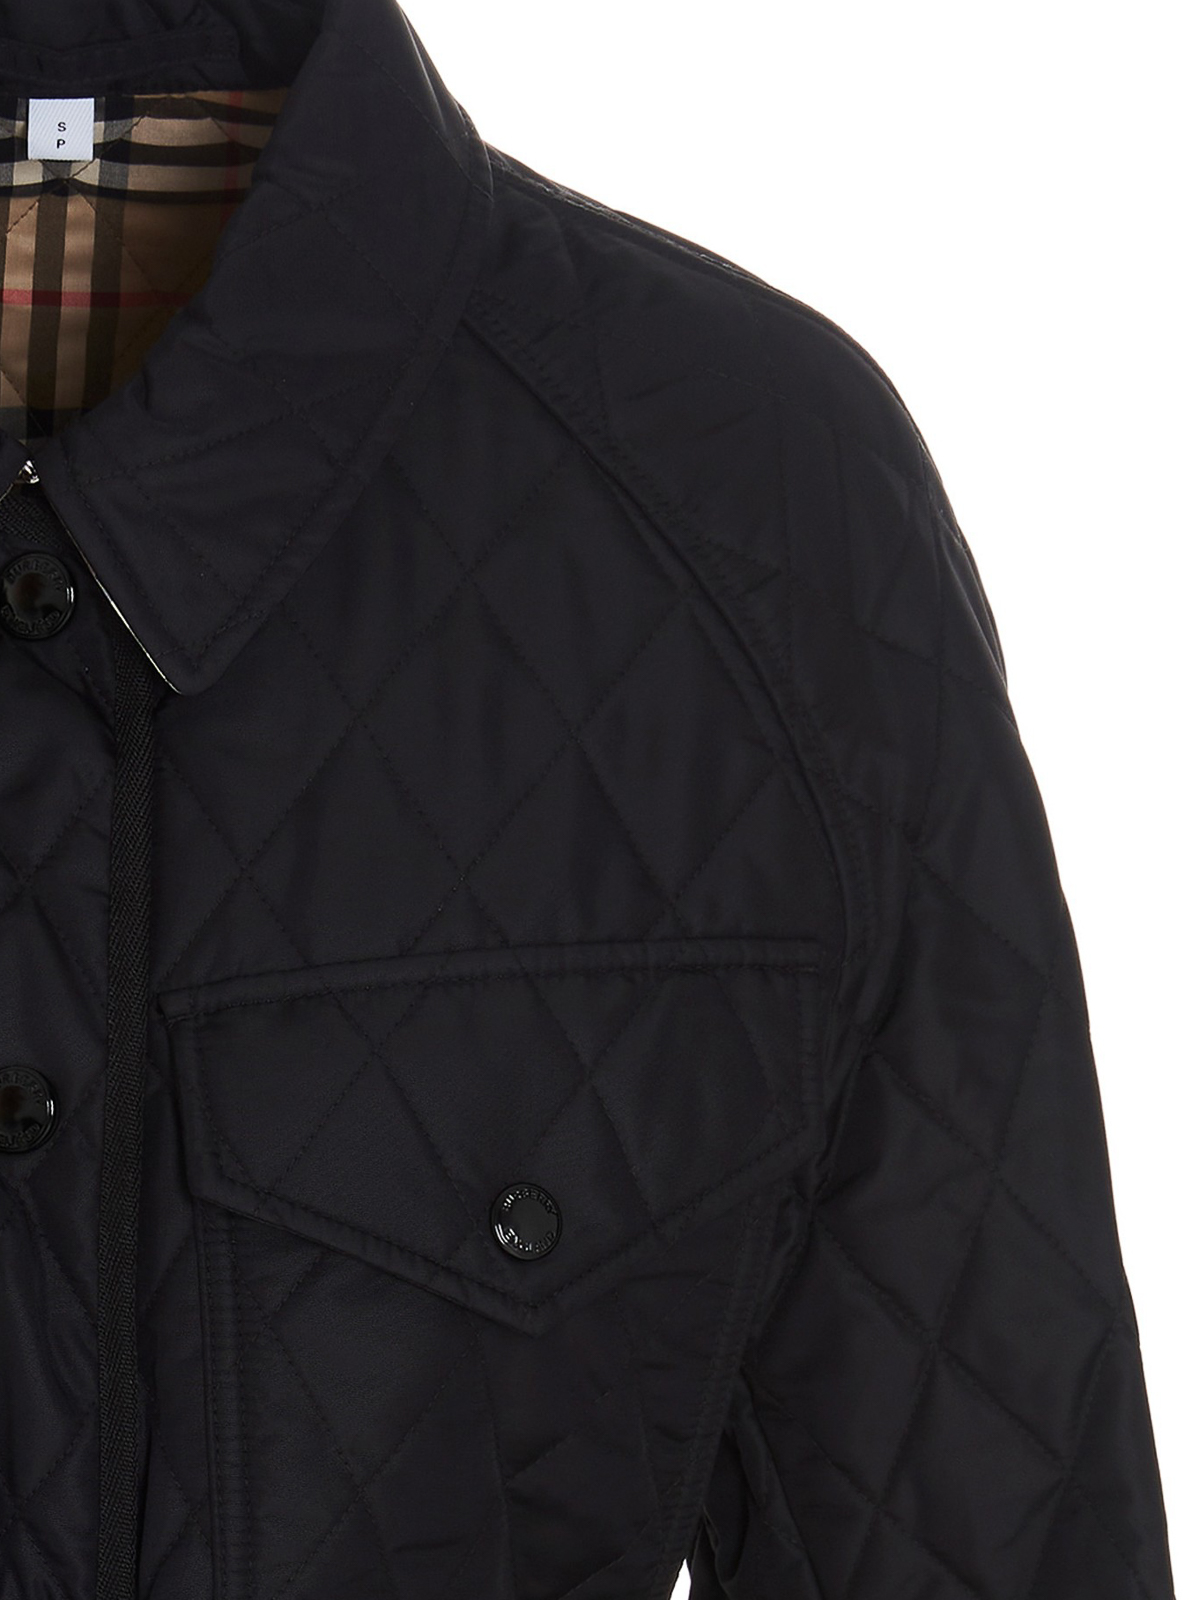 Padded jackets Burberry - Kemble jacket - 8034122 | Shop online at iKRIX